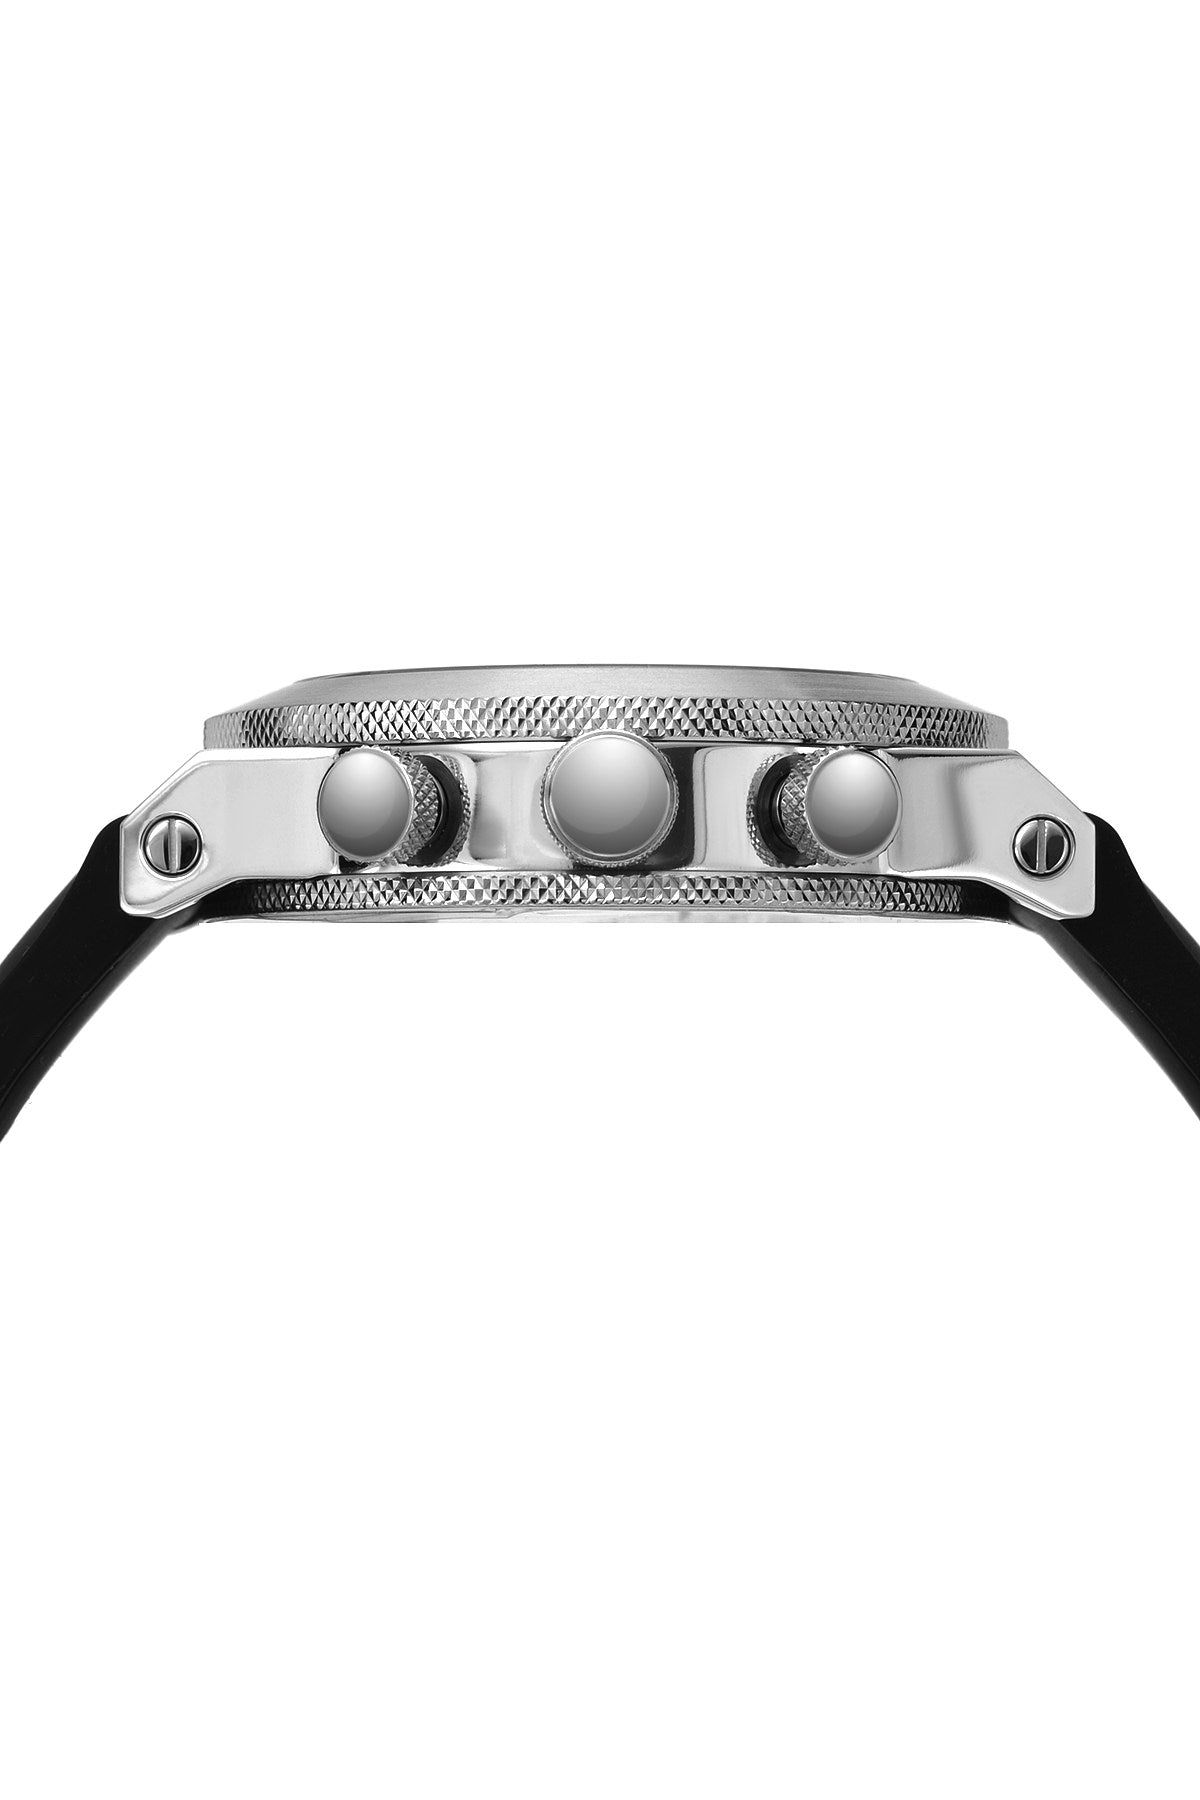 Porsamo Bleu Finley luxury chronograph men's watch, silicone strap, silver, black, white 401AFIR